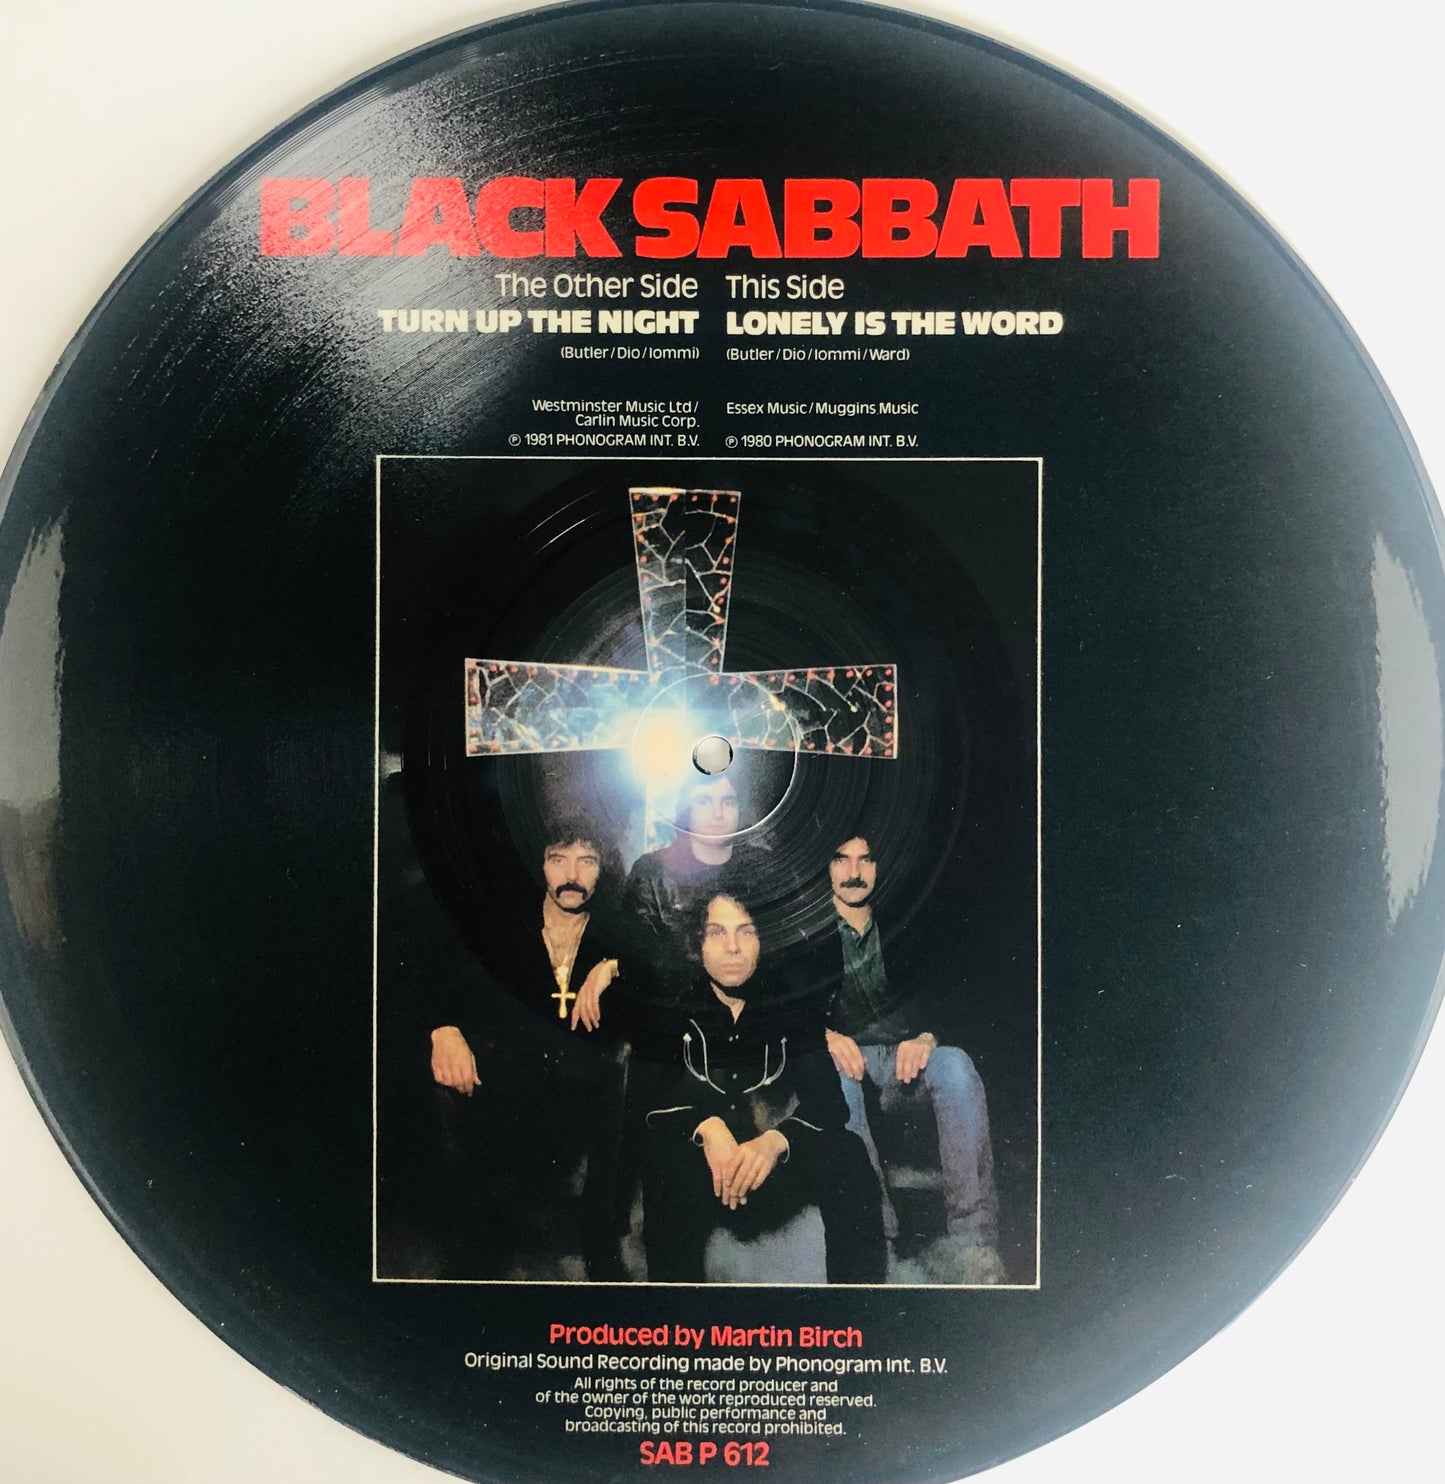 1982 Black Sabbath "Turn Up the Night" 12" Vinyl Picture Disc